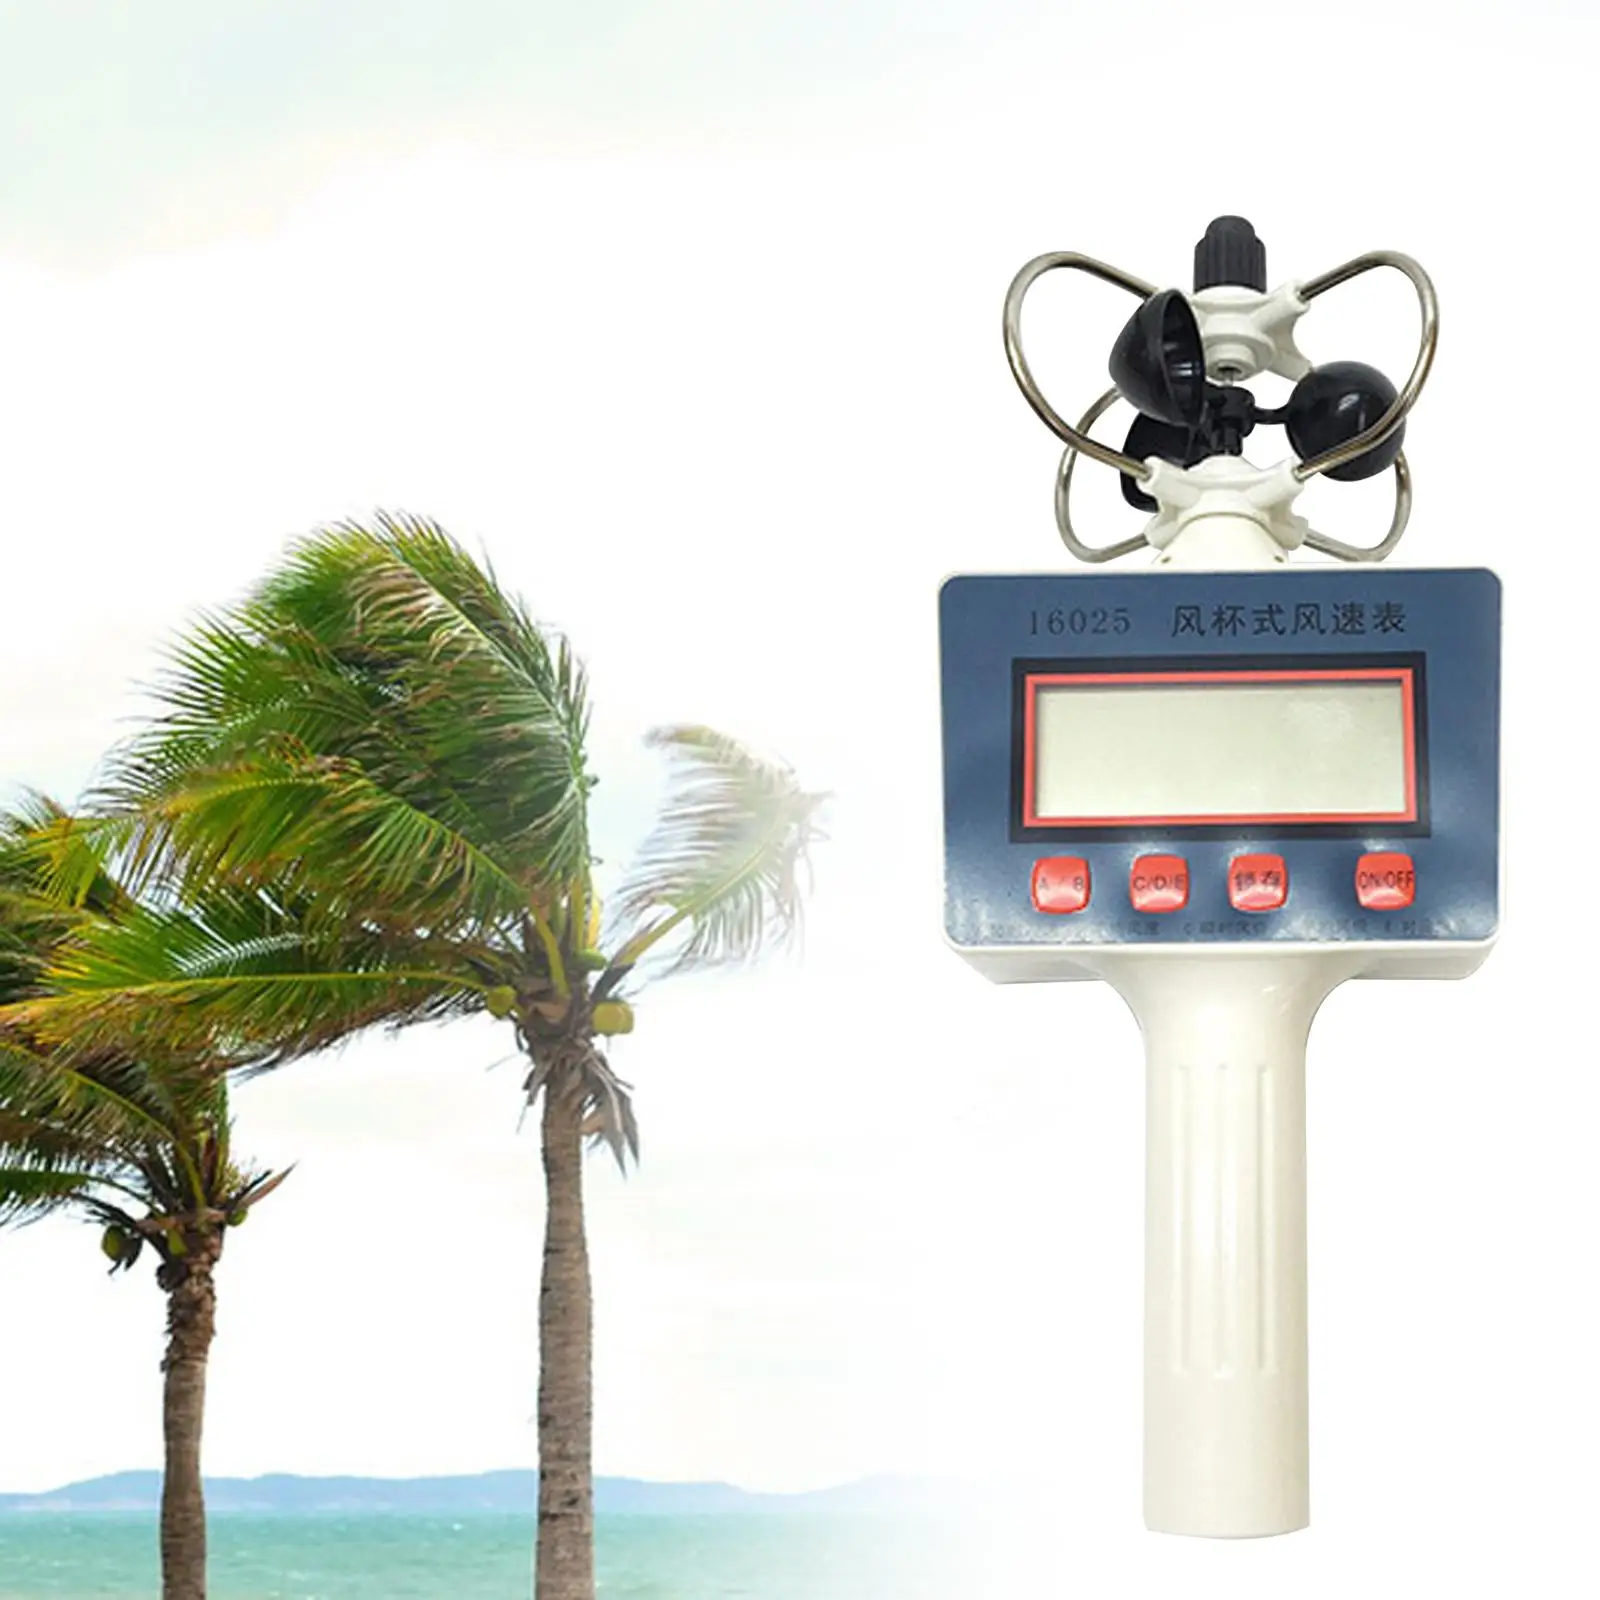 Cup Wind Speed Gauge Tool Portable Handheld Anemometer Air Velocity Gauge Digital for Indoor school Drone Drving Surfing